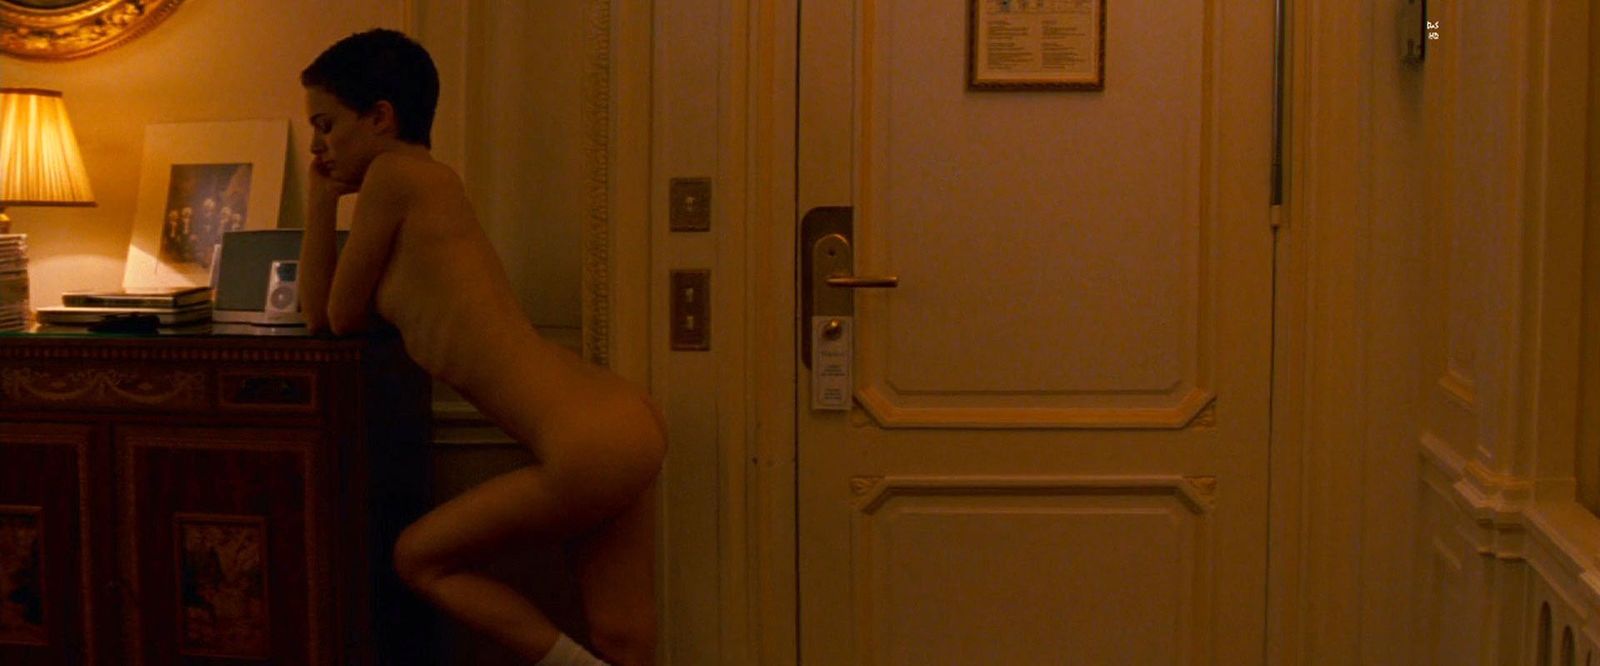 Natalie portman hotel chevalier nude scene